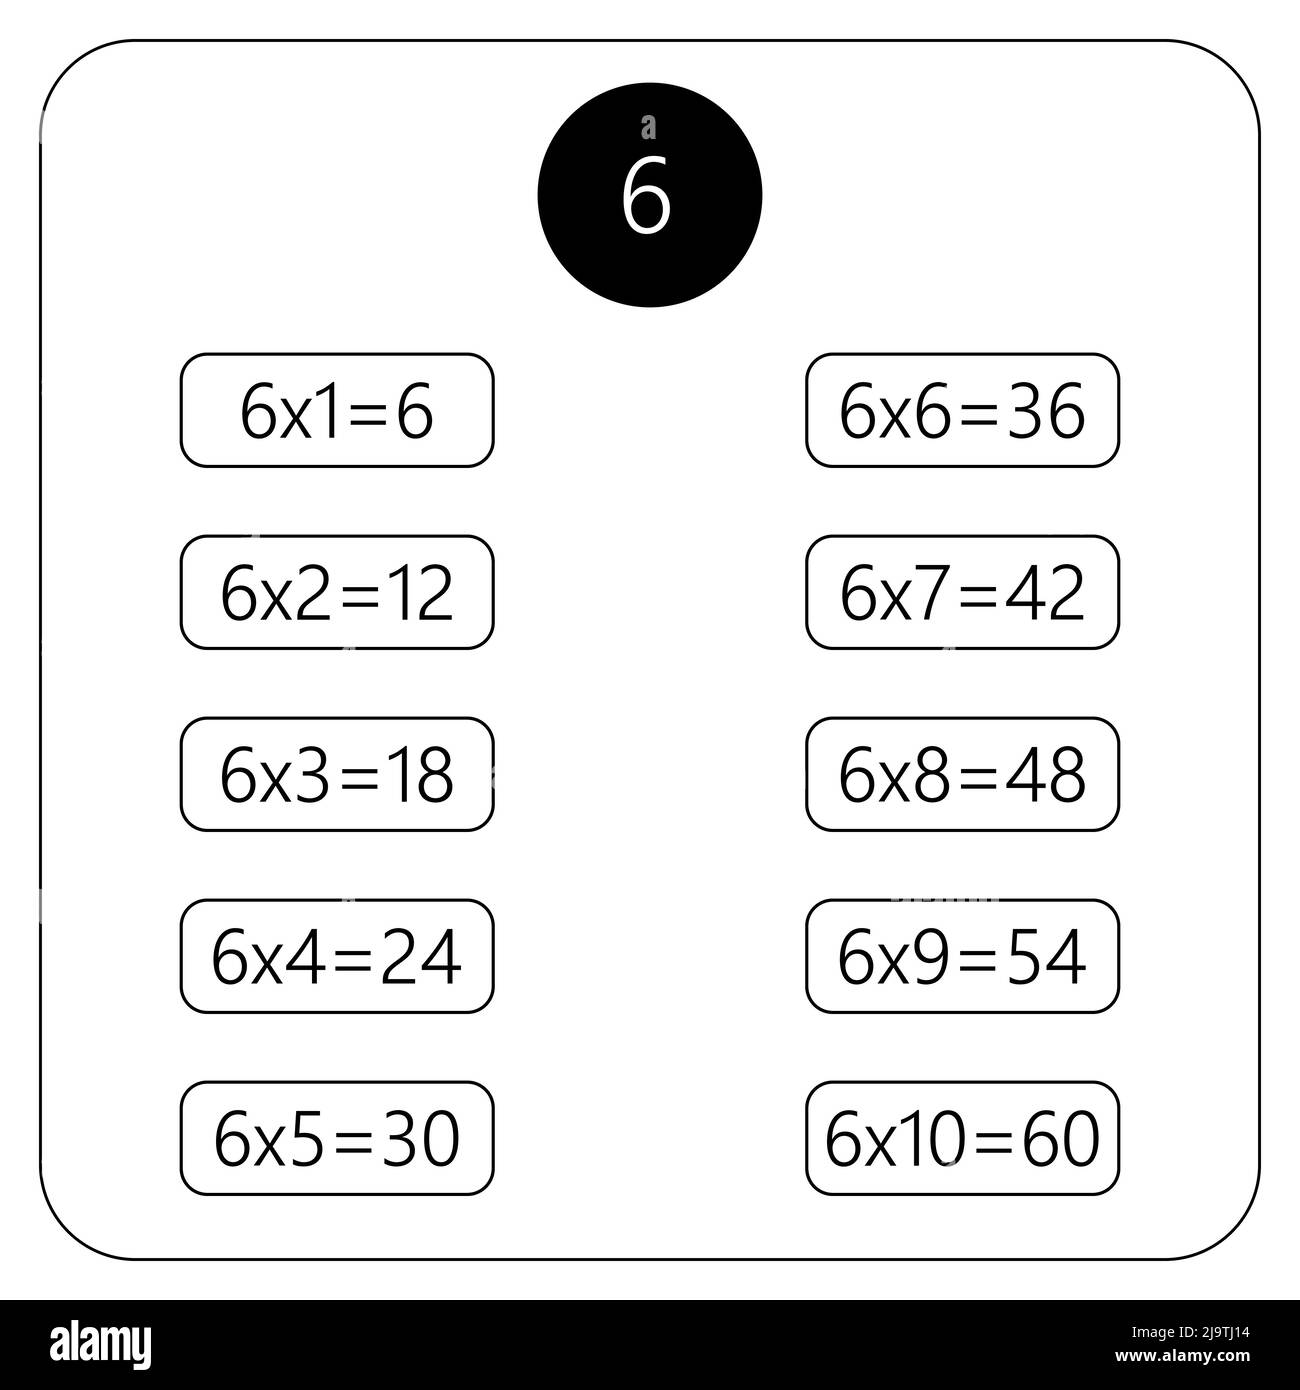 Multiplication Square. School vector illustration. Multiplication Table. Poster for kids education. Maths child card Stock Vector